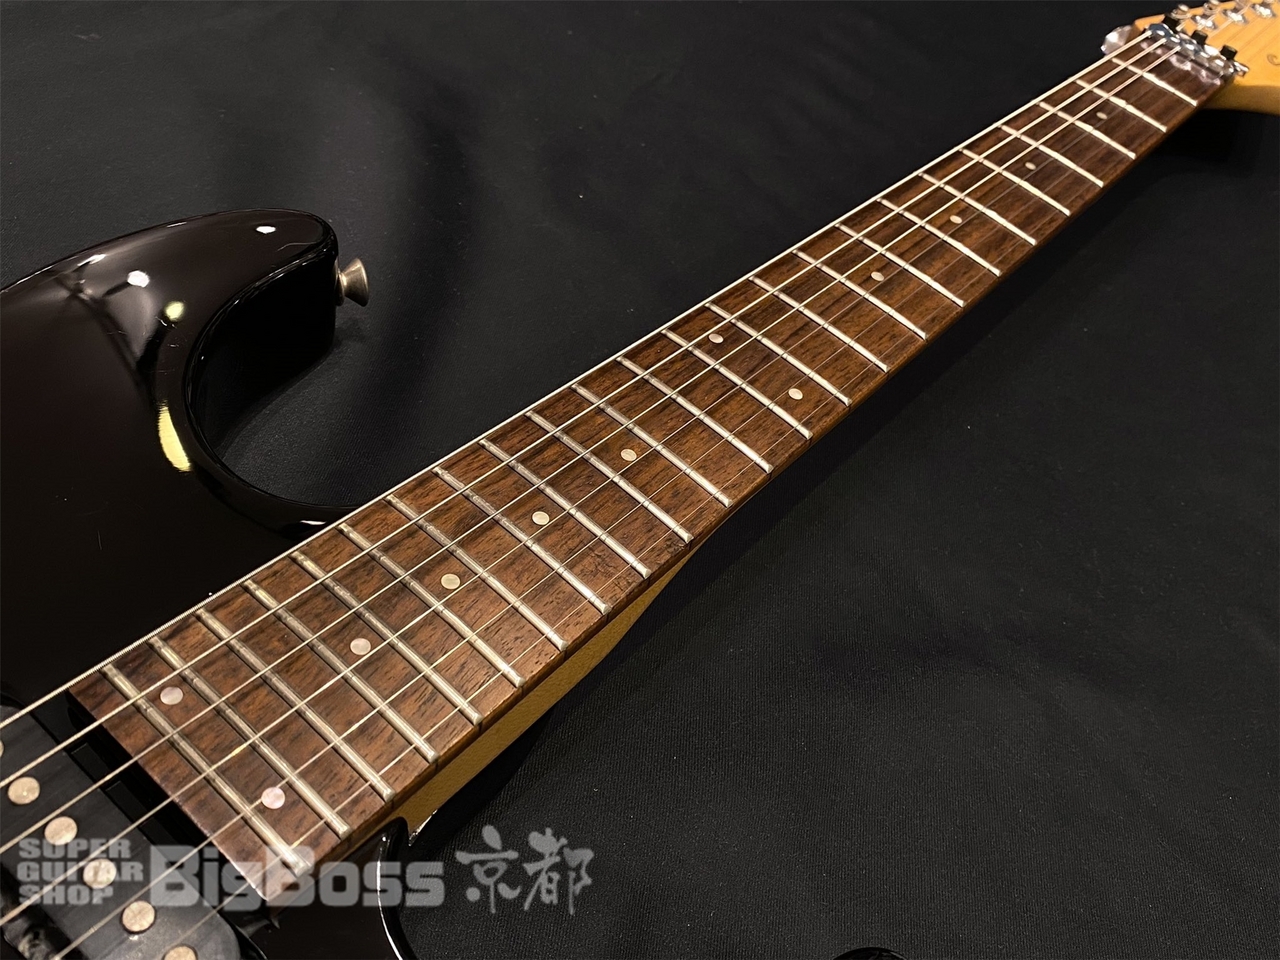 Squier by Fender STG36F BLACK アーム有り - エレキギター